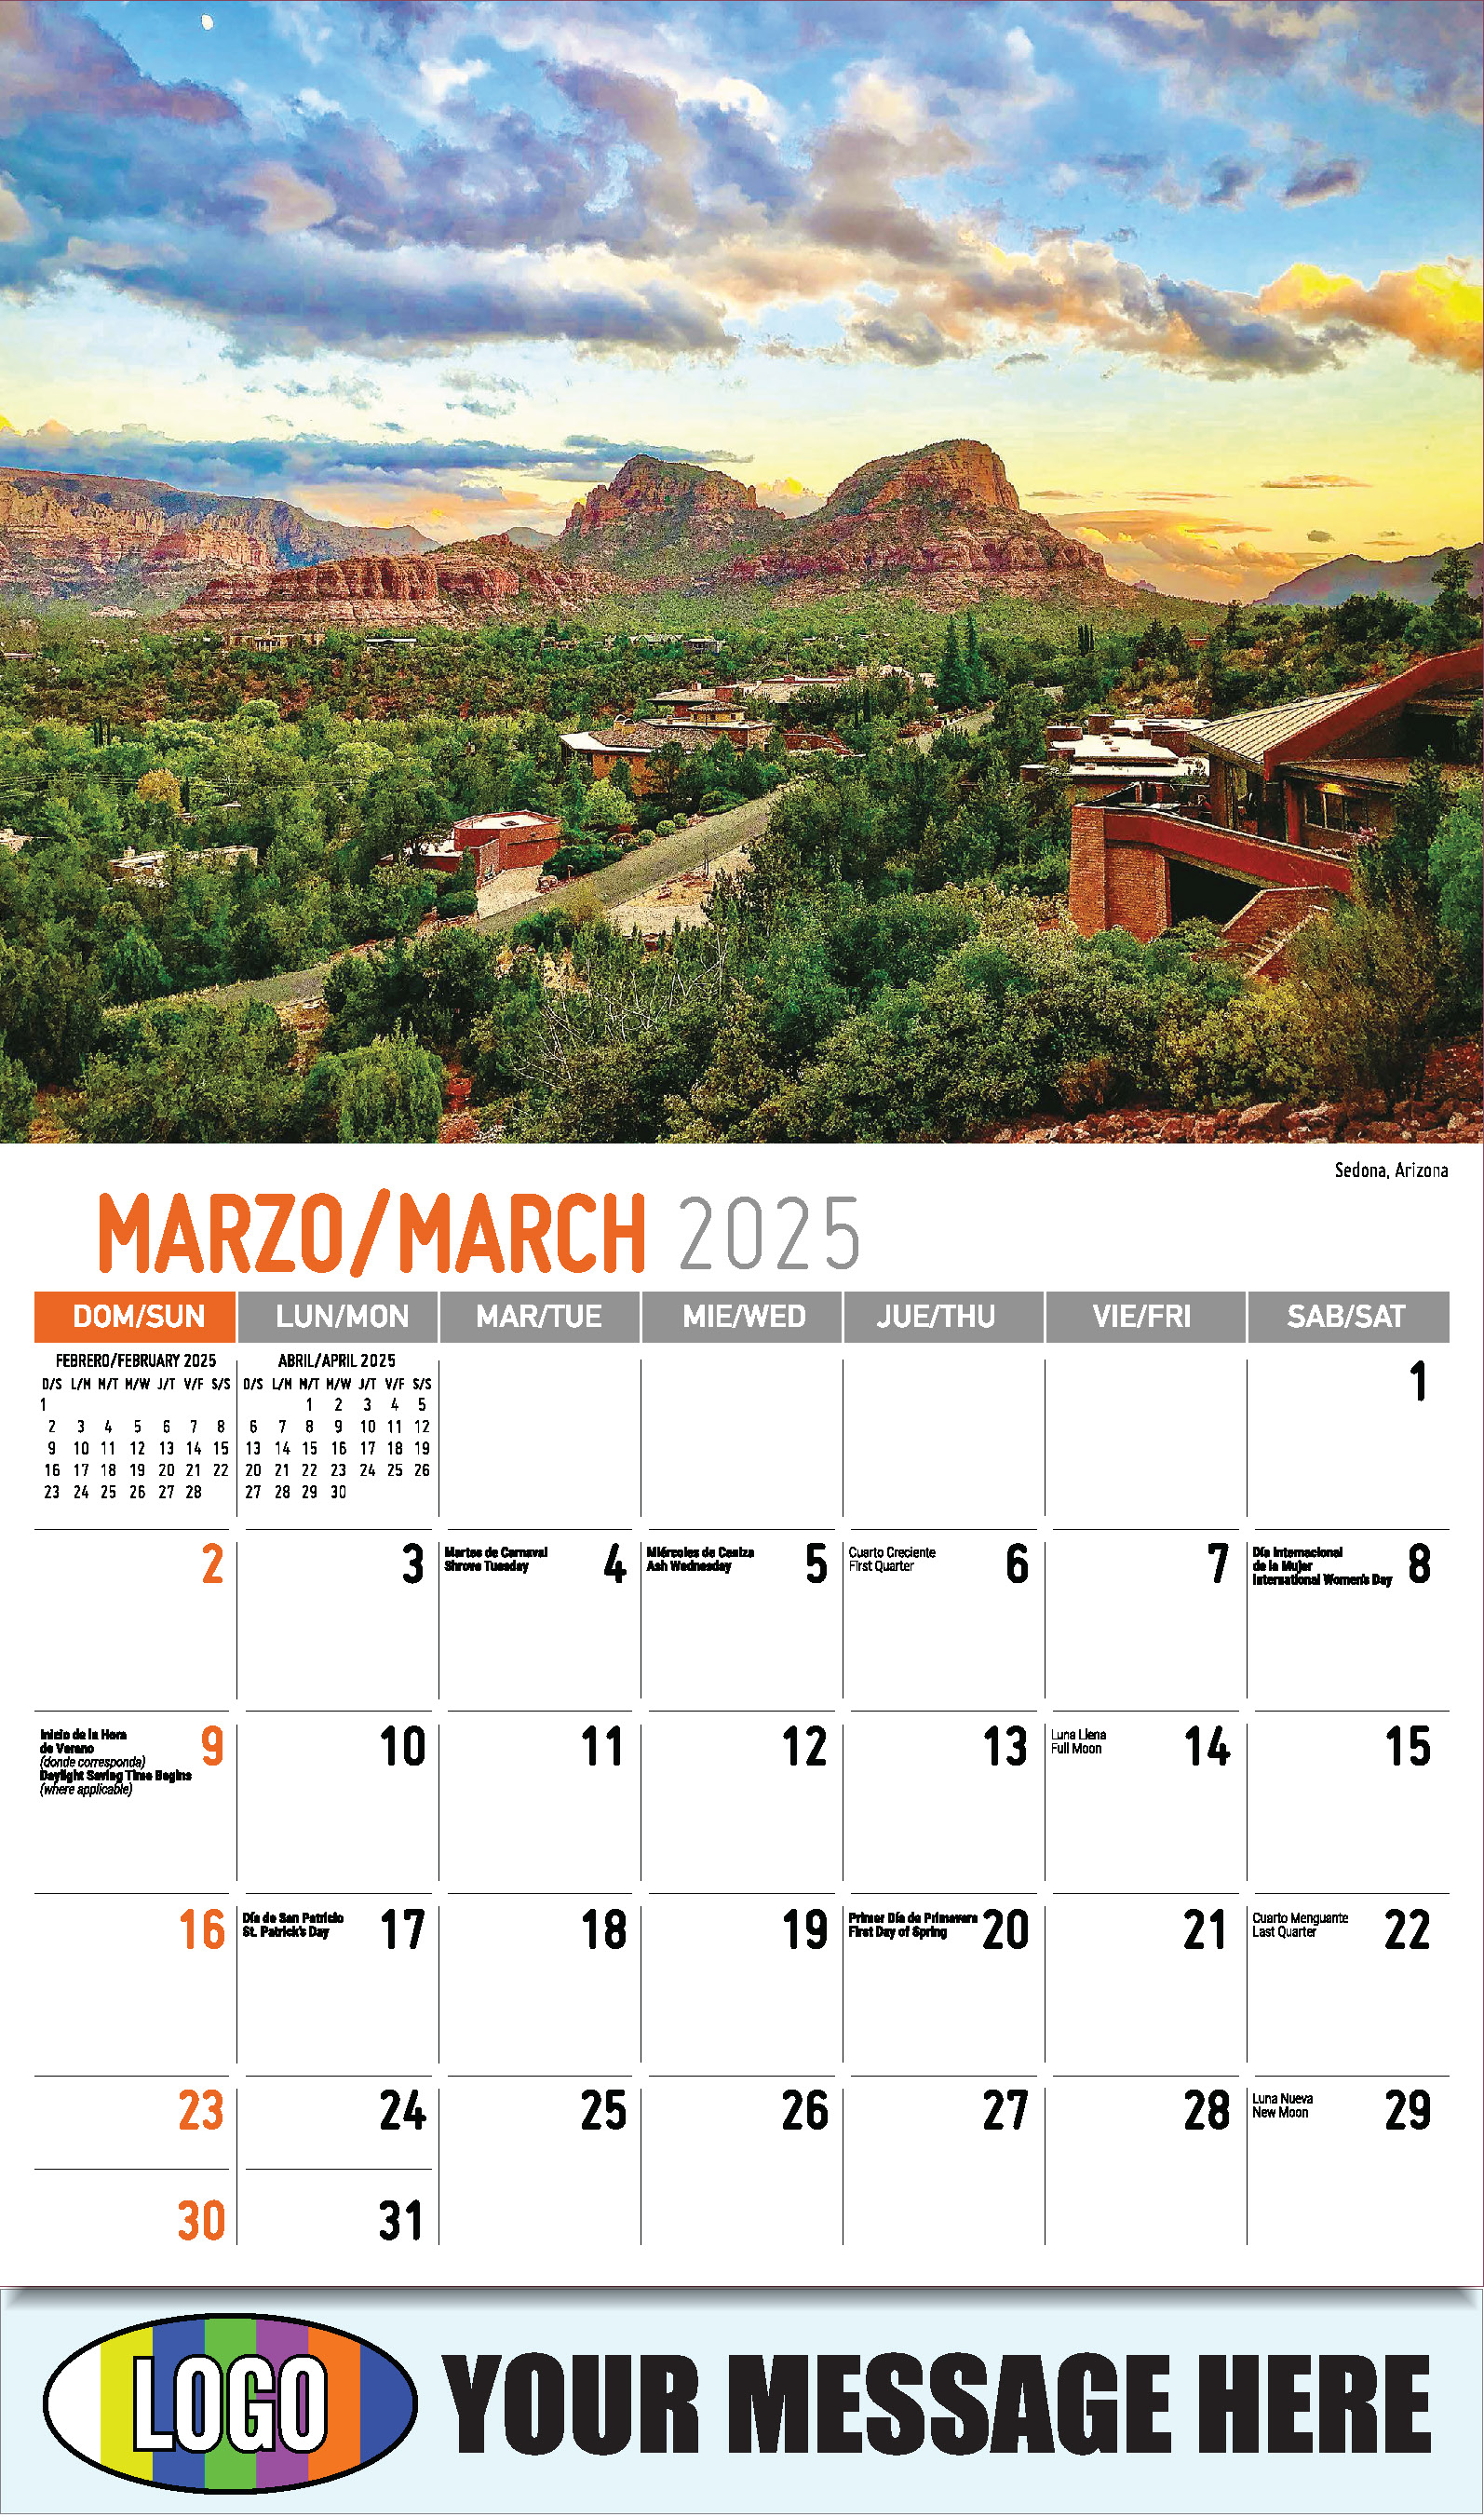 Scenes of America 2025 Bilingual Business Promo Calendar - March